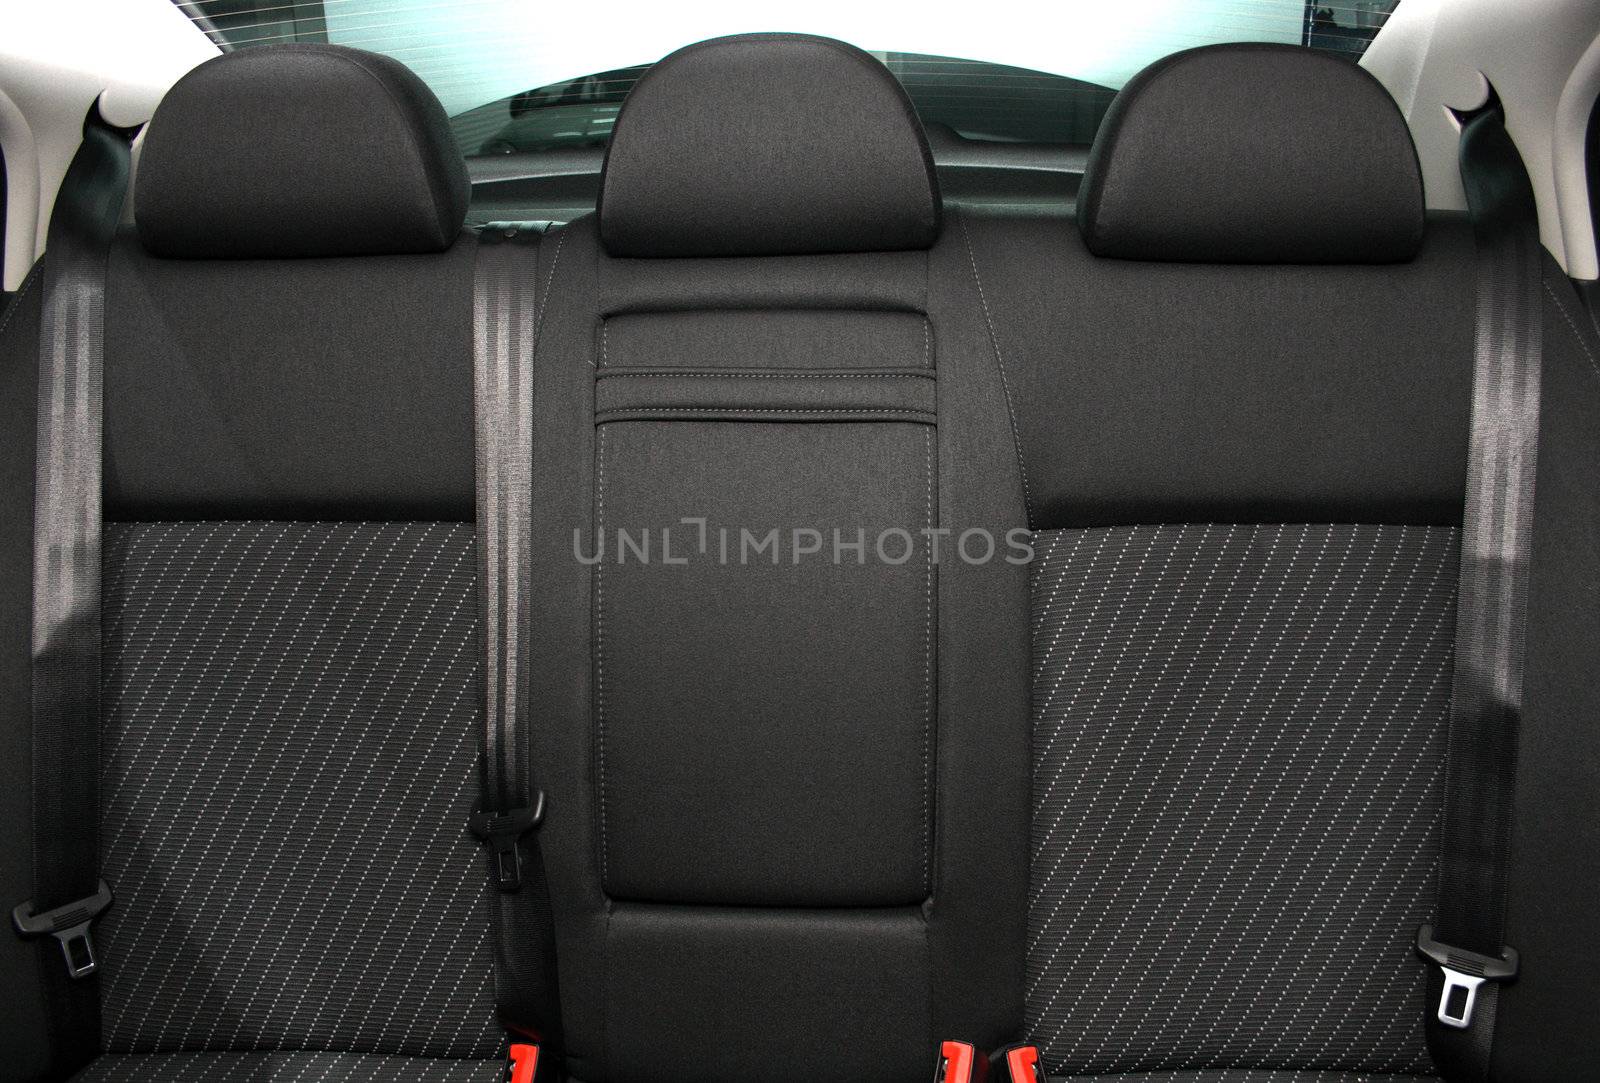 Back passenger seats in a car by Gdolgikh